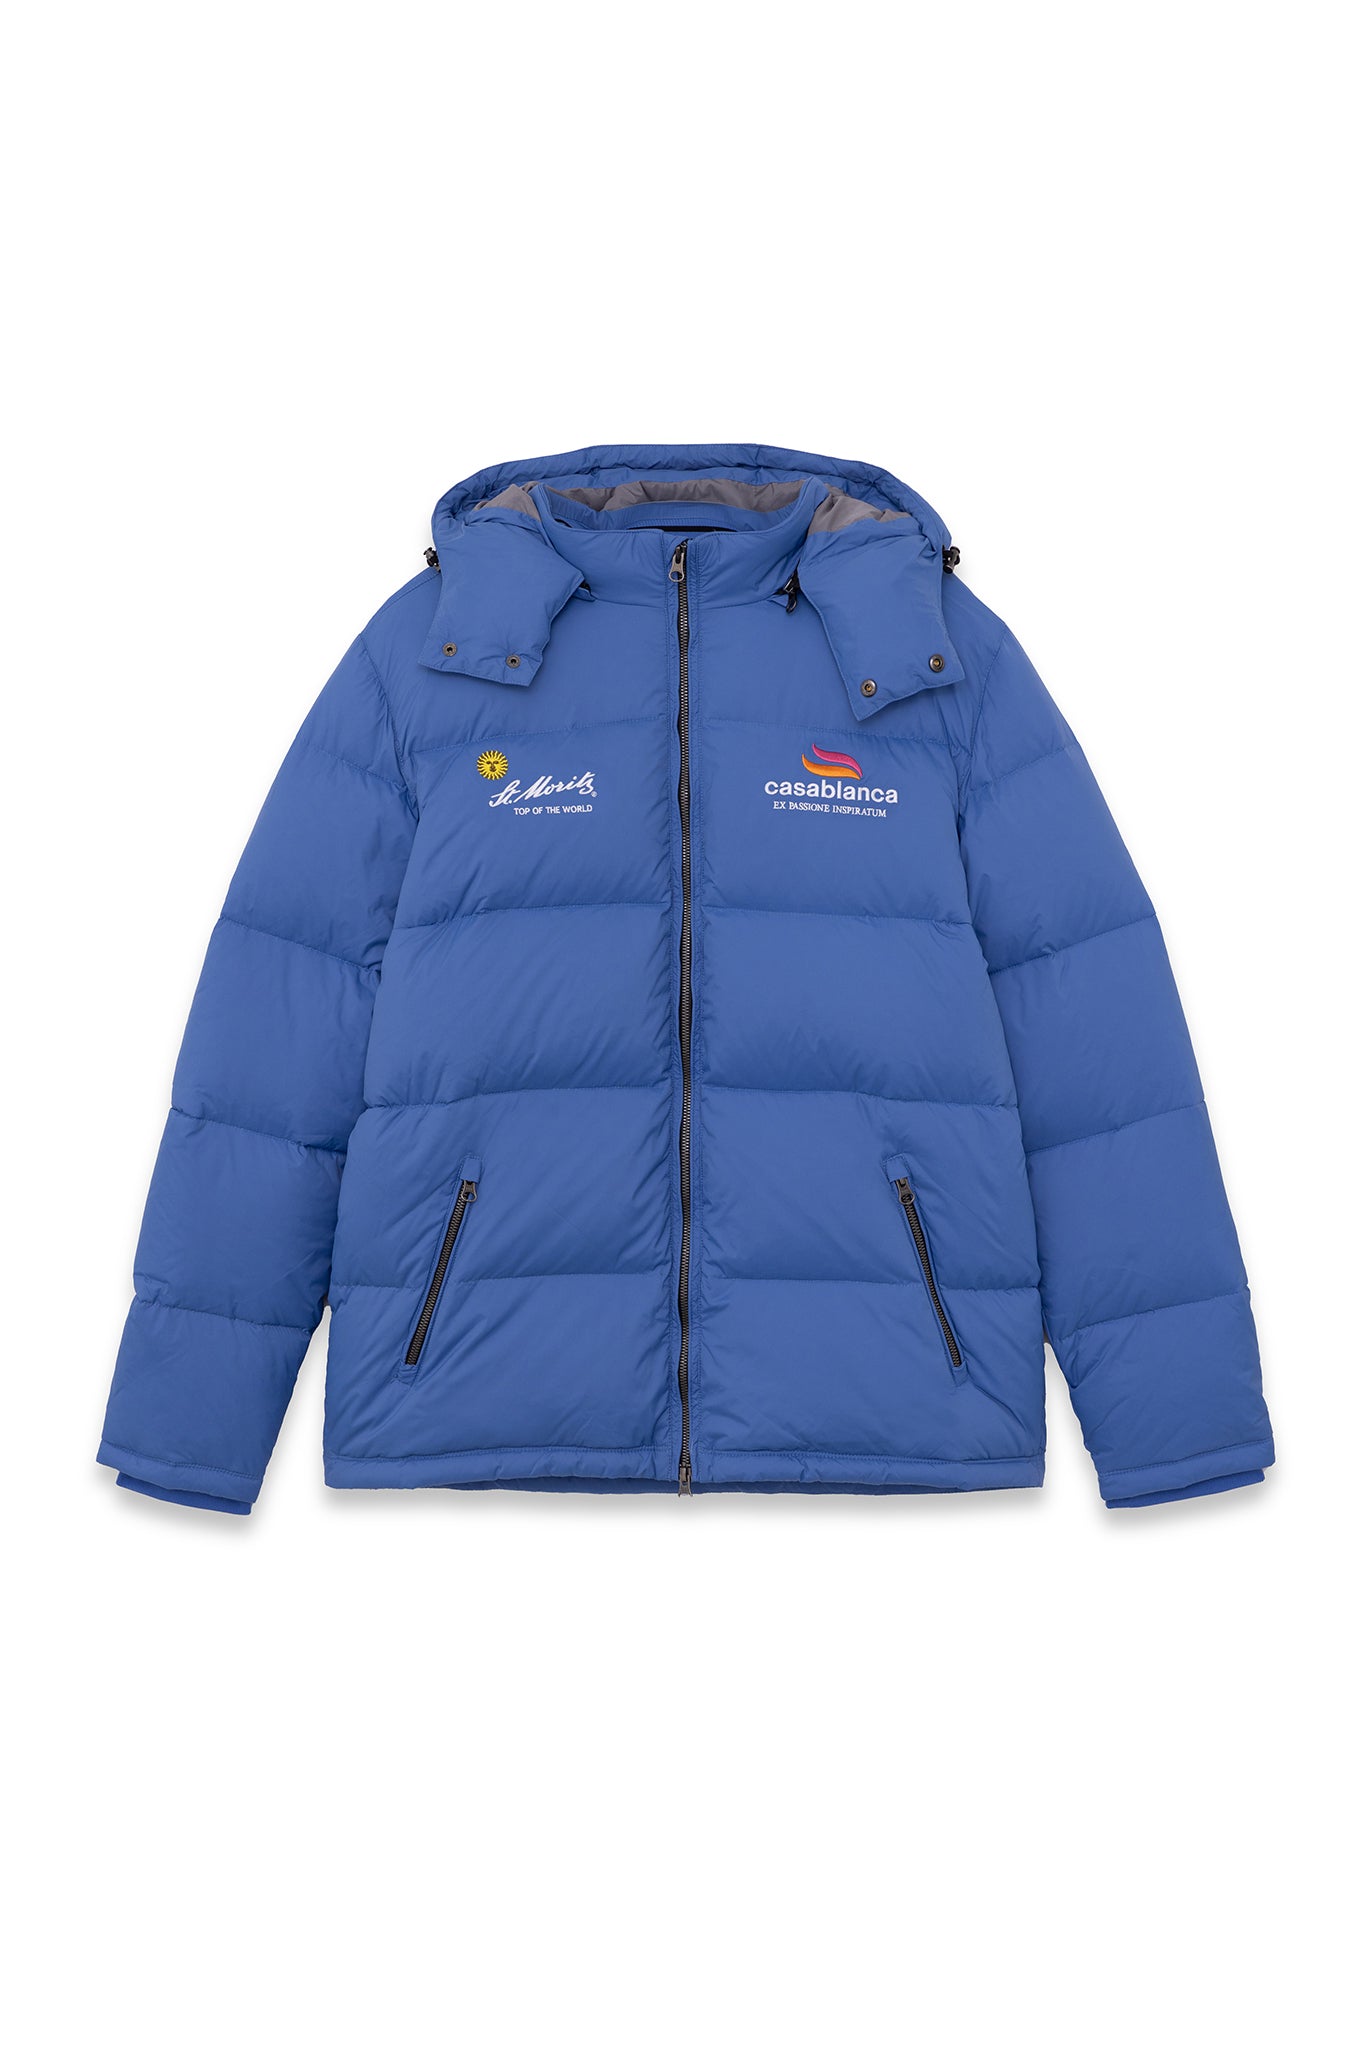 Official St. Moritz Snow Polo Jacket